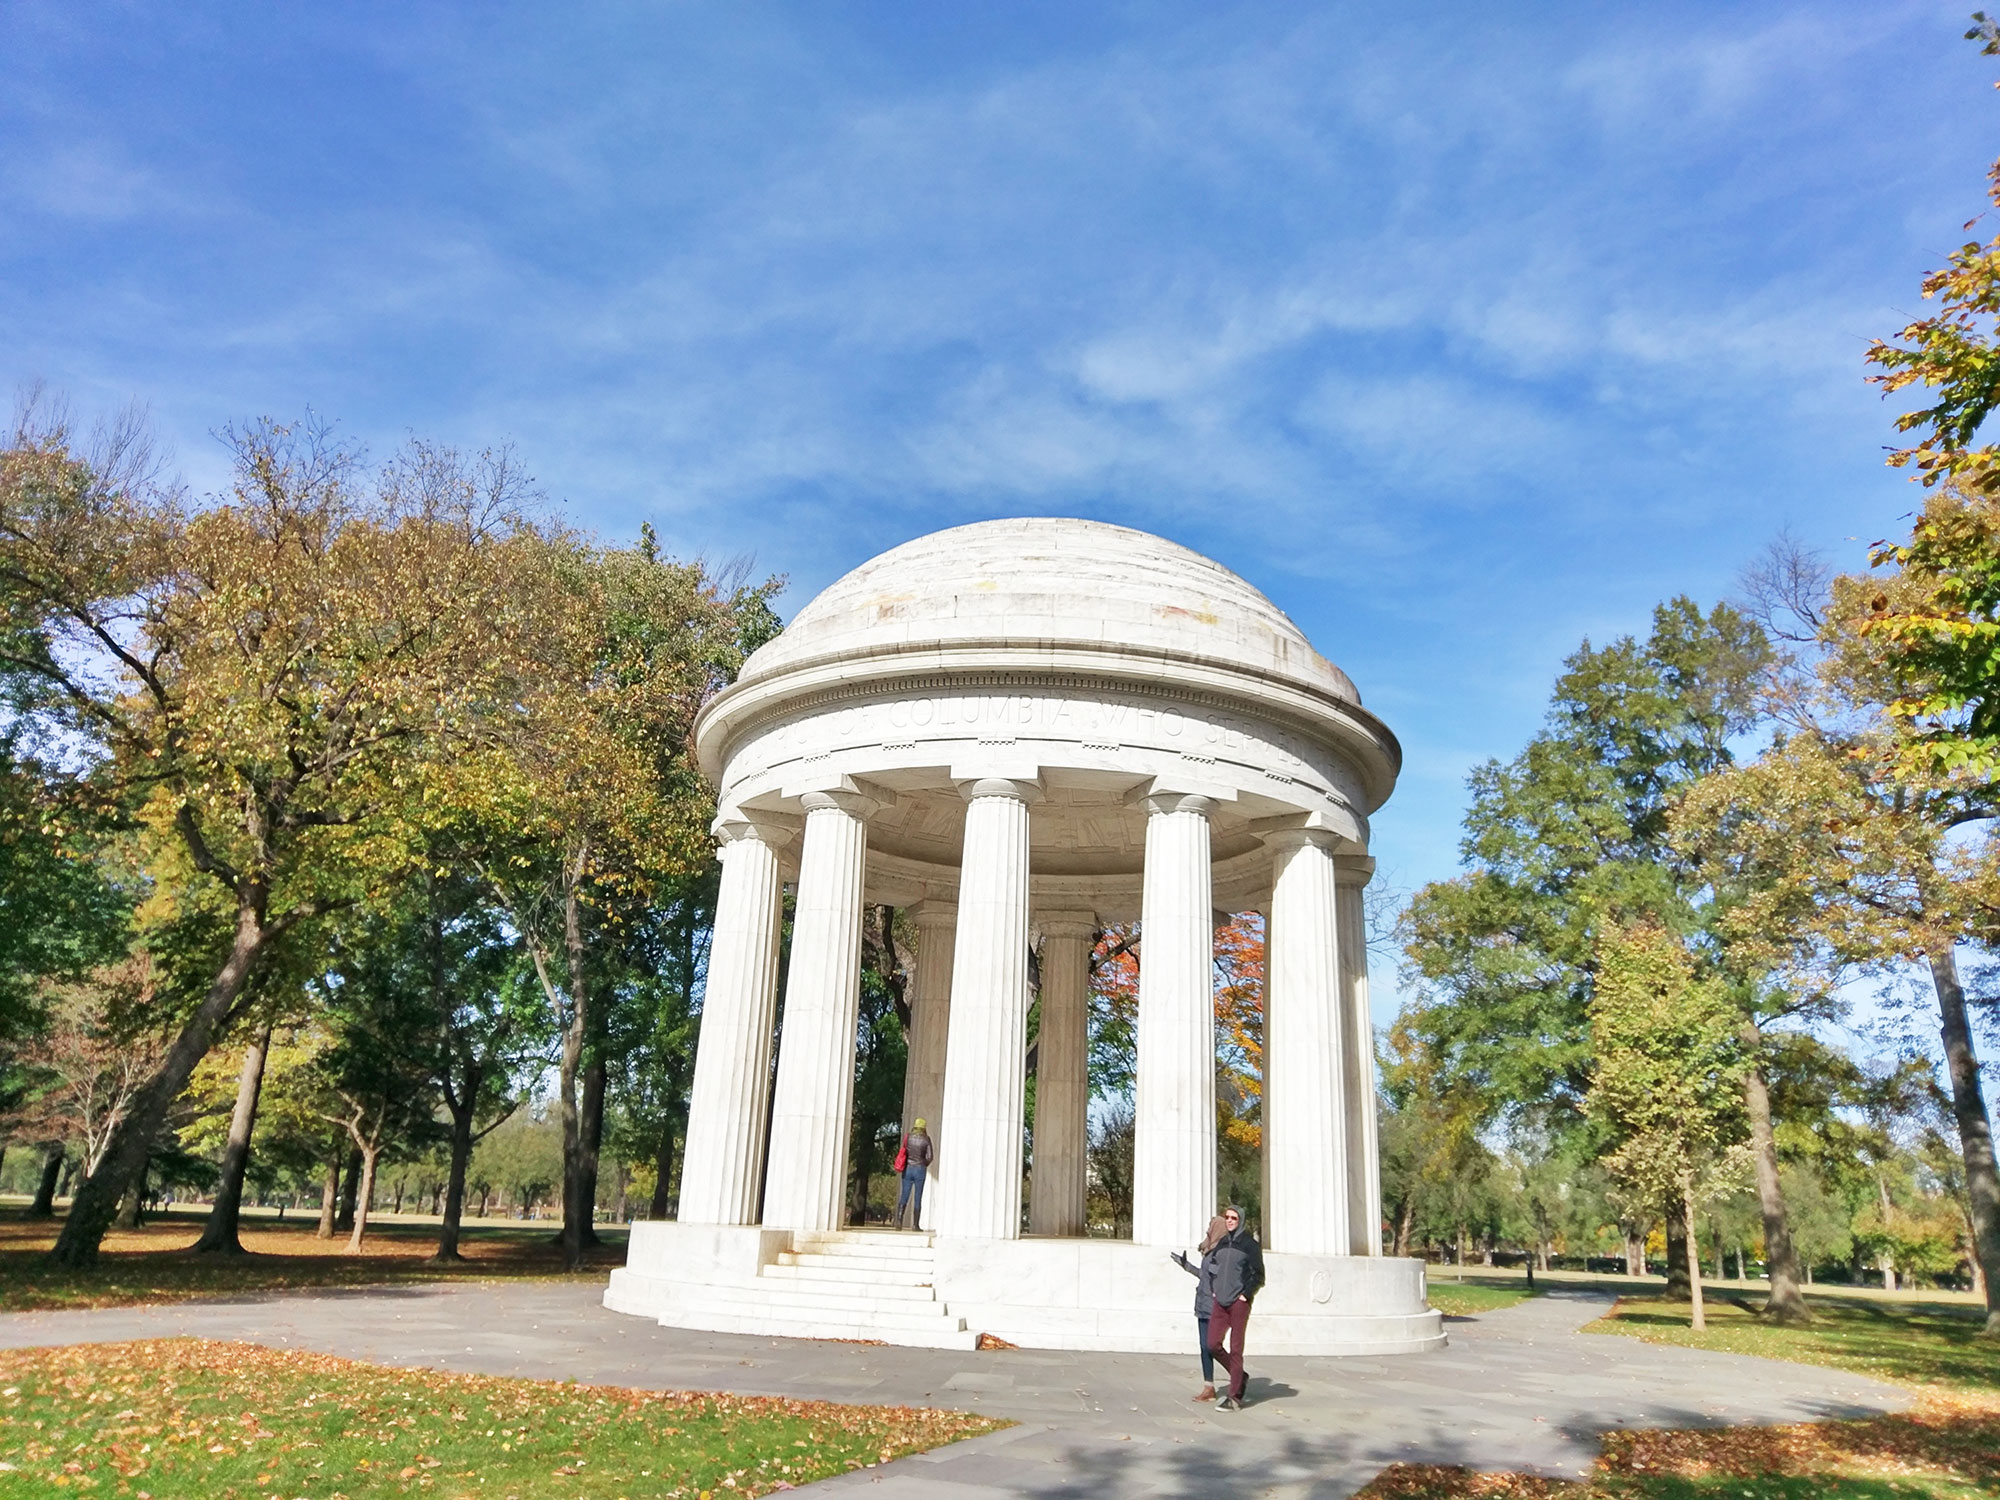 World War II Memorial in Washington D.C.